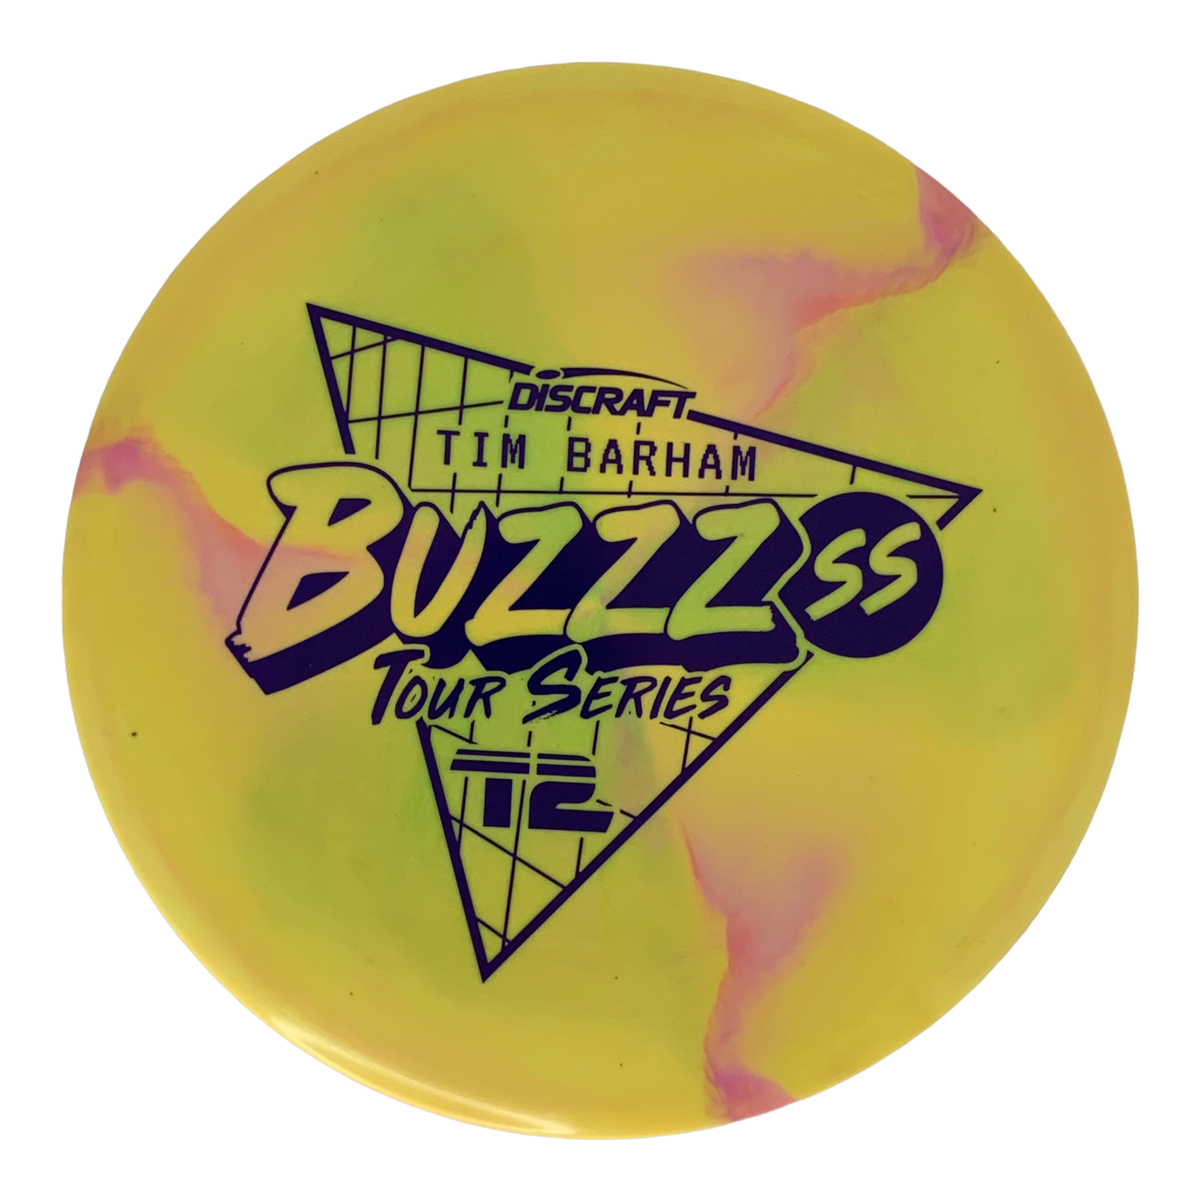 Discraft Tim Barham ESP Swirl Buzzz SS - 2022 Tour Series